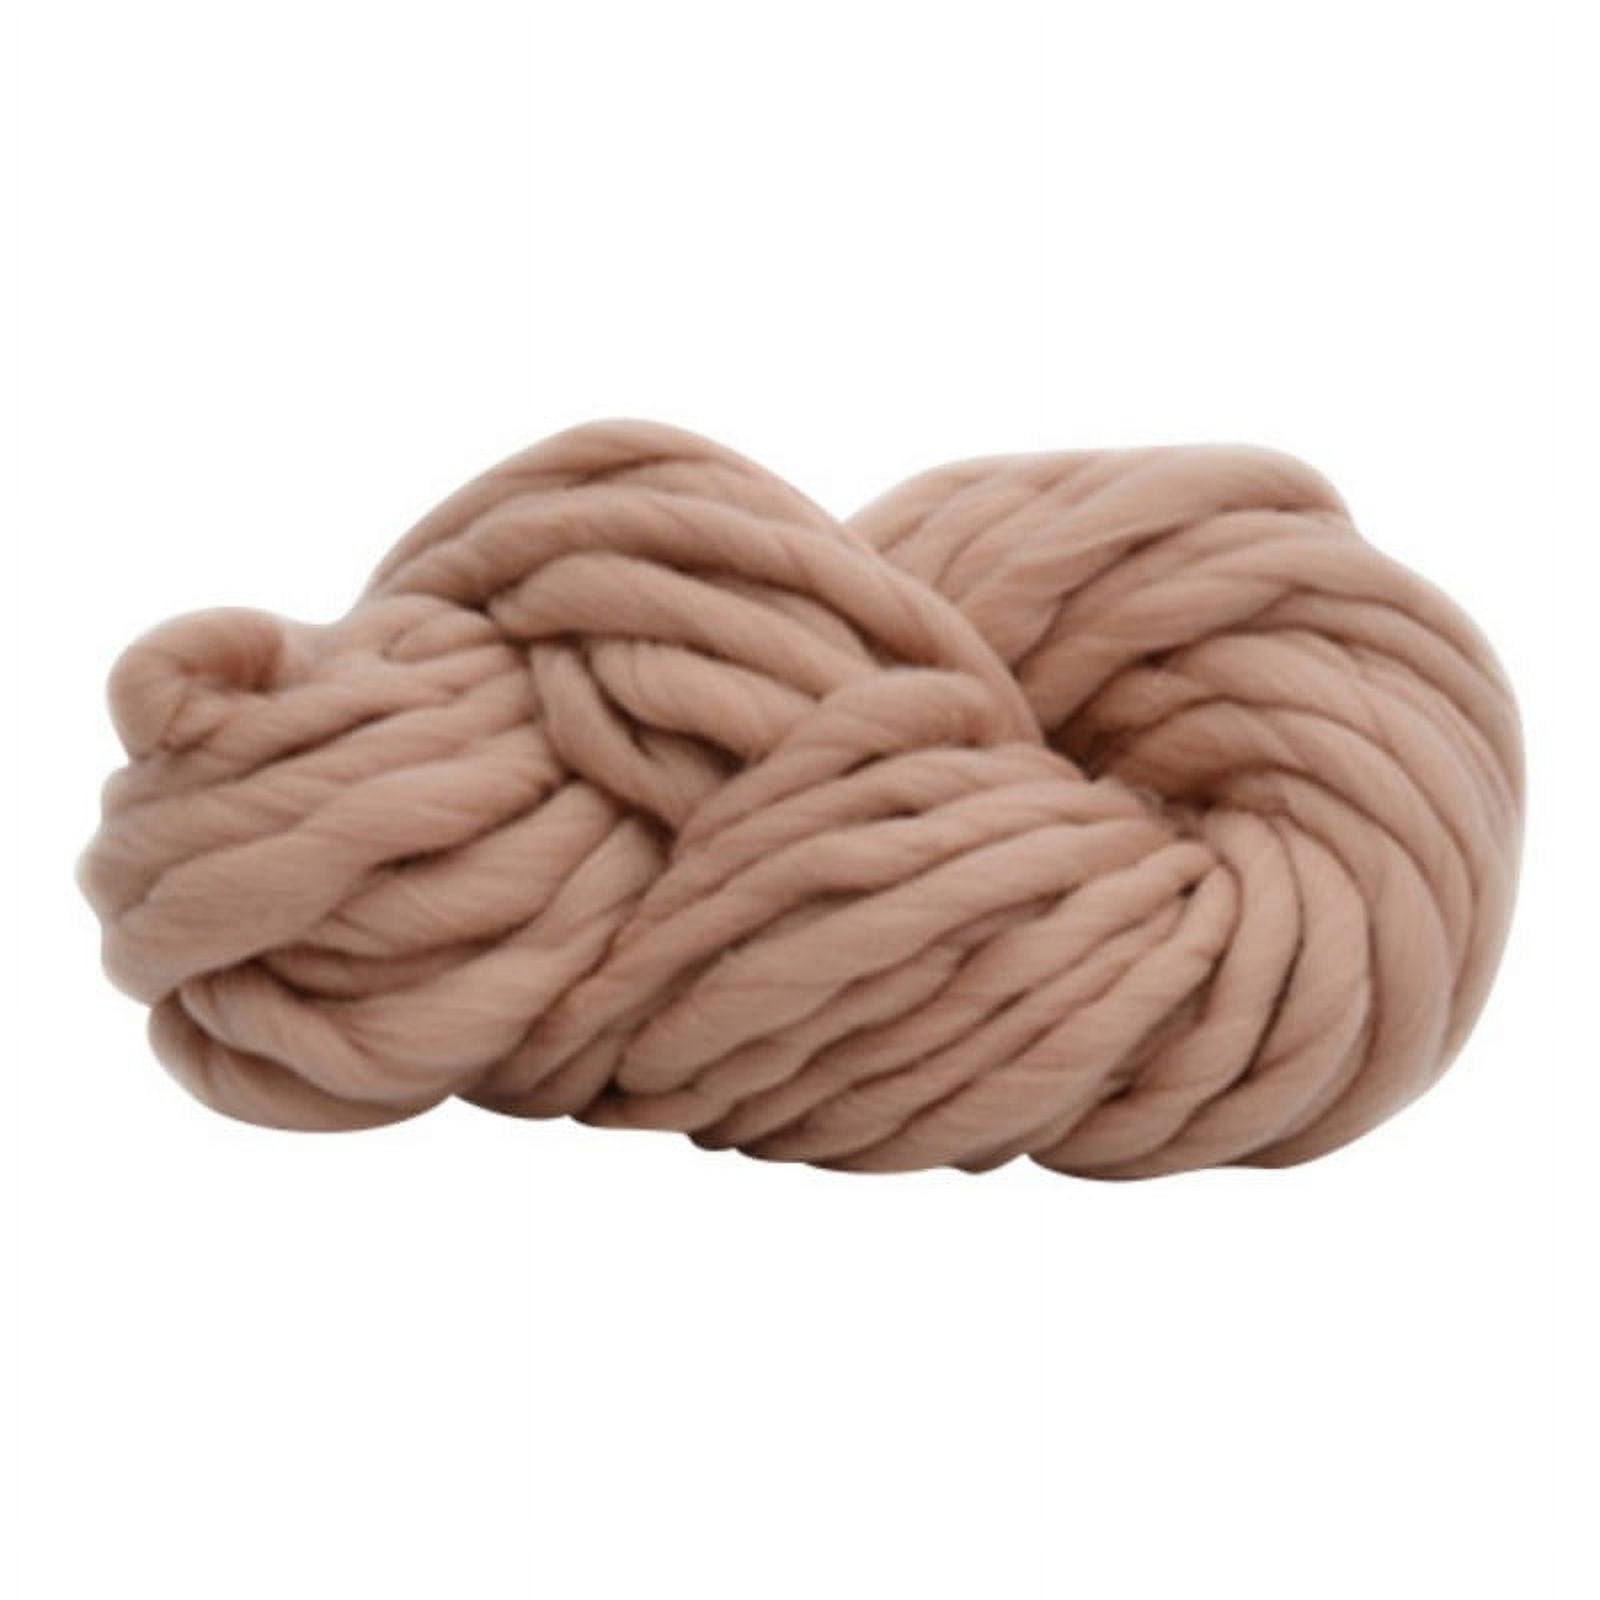 Fluffy Chenille Yarn Soft Crochet Yarn New Carpet Yarn Knitting Accessories  – the best products in the Joom Geek online store